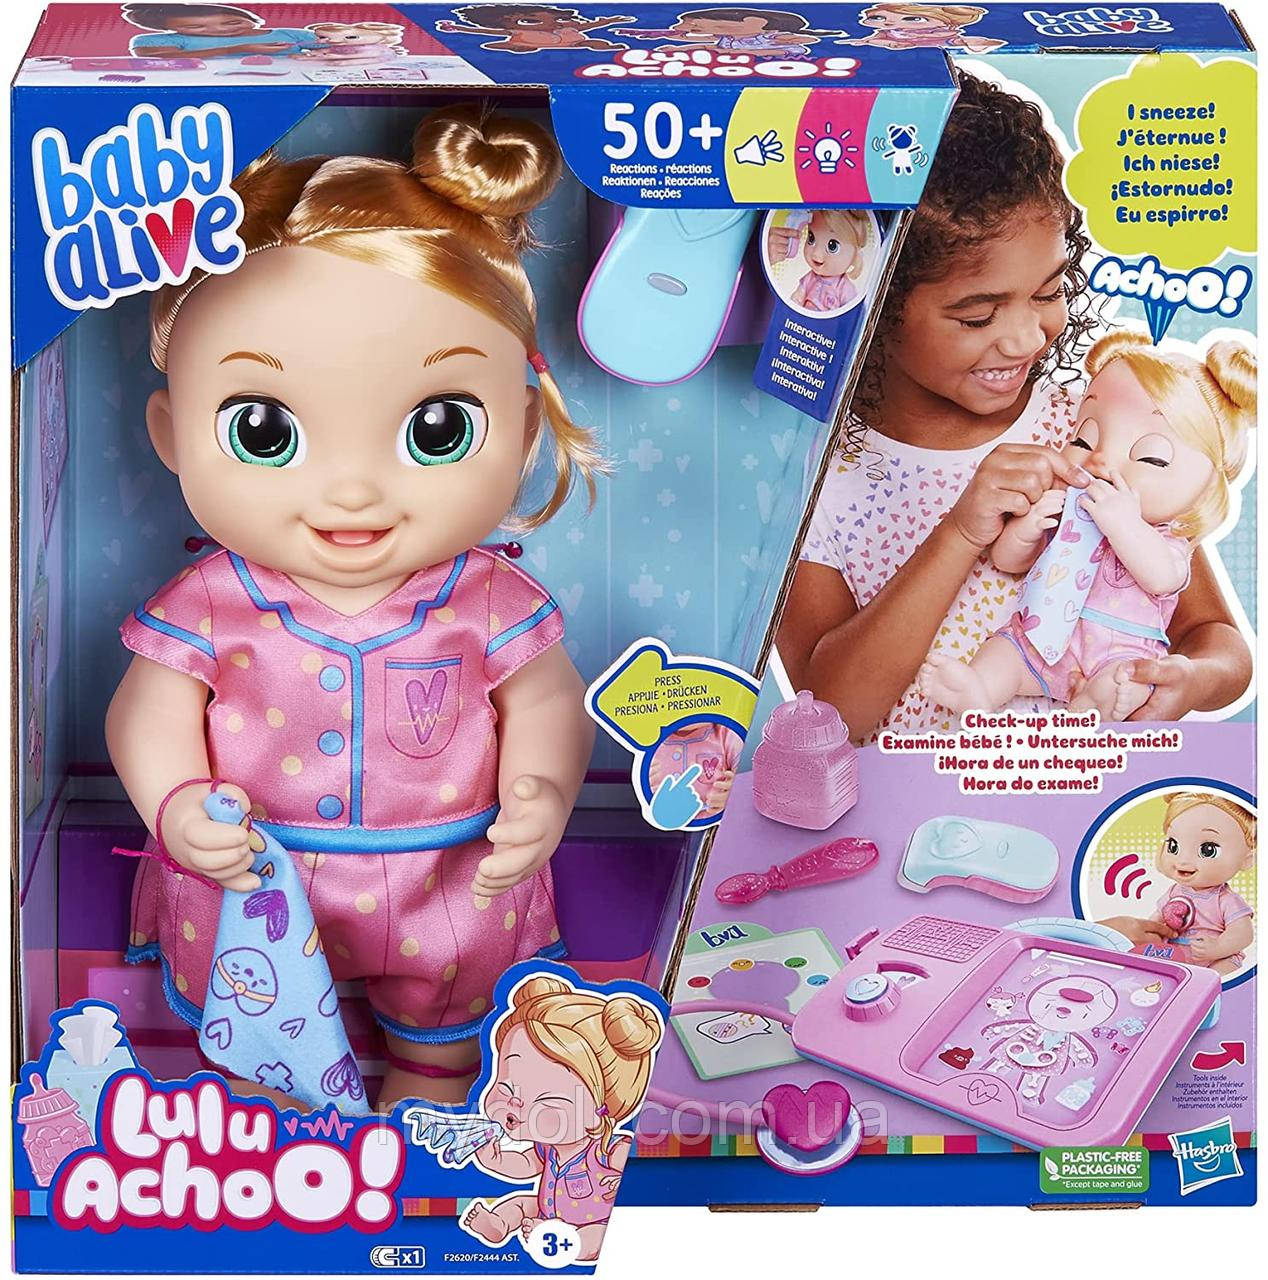 Інтерактивна лялька Хасбро Лулу Ачхи - Hasbro Baby Alive Lulu Achoo Doll F2620